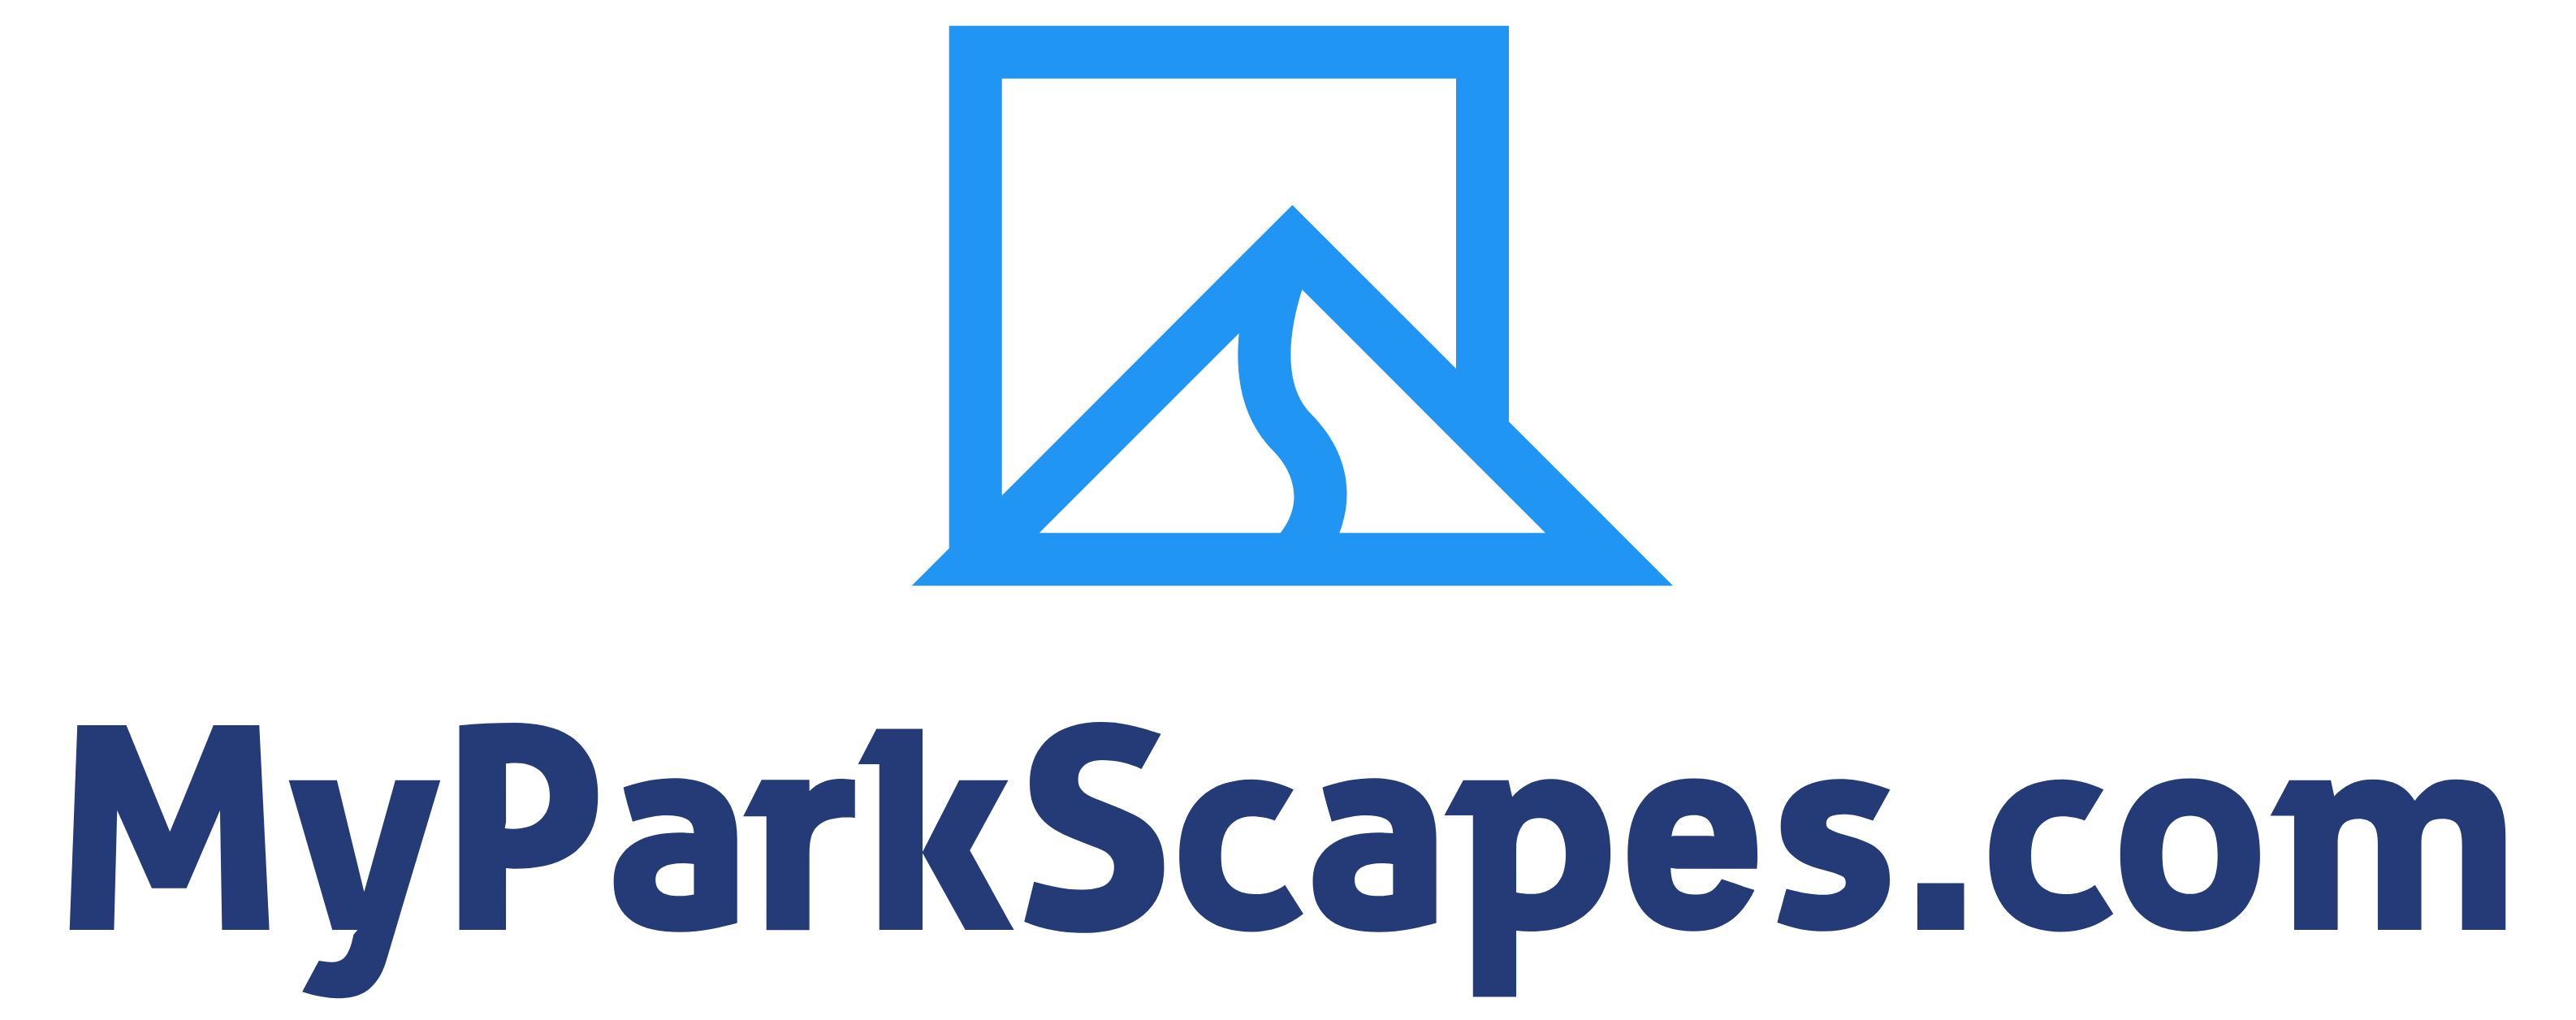 MyParkScapes.com